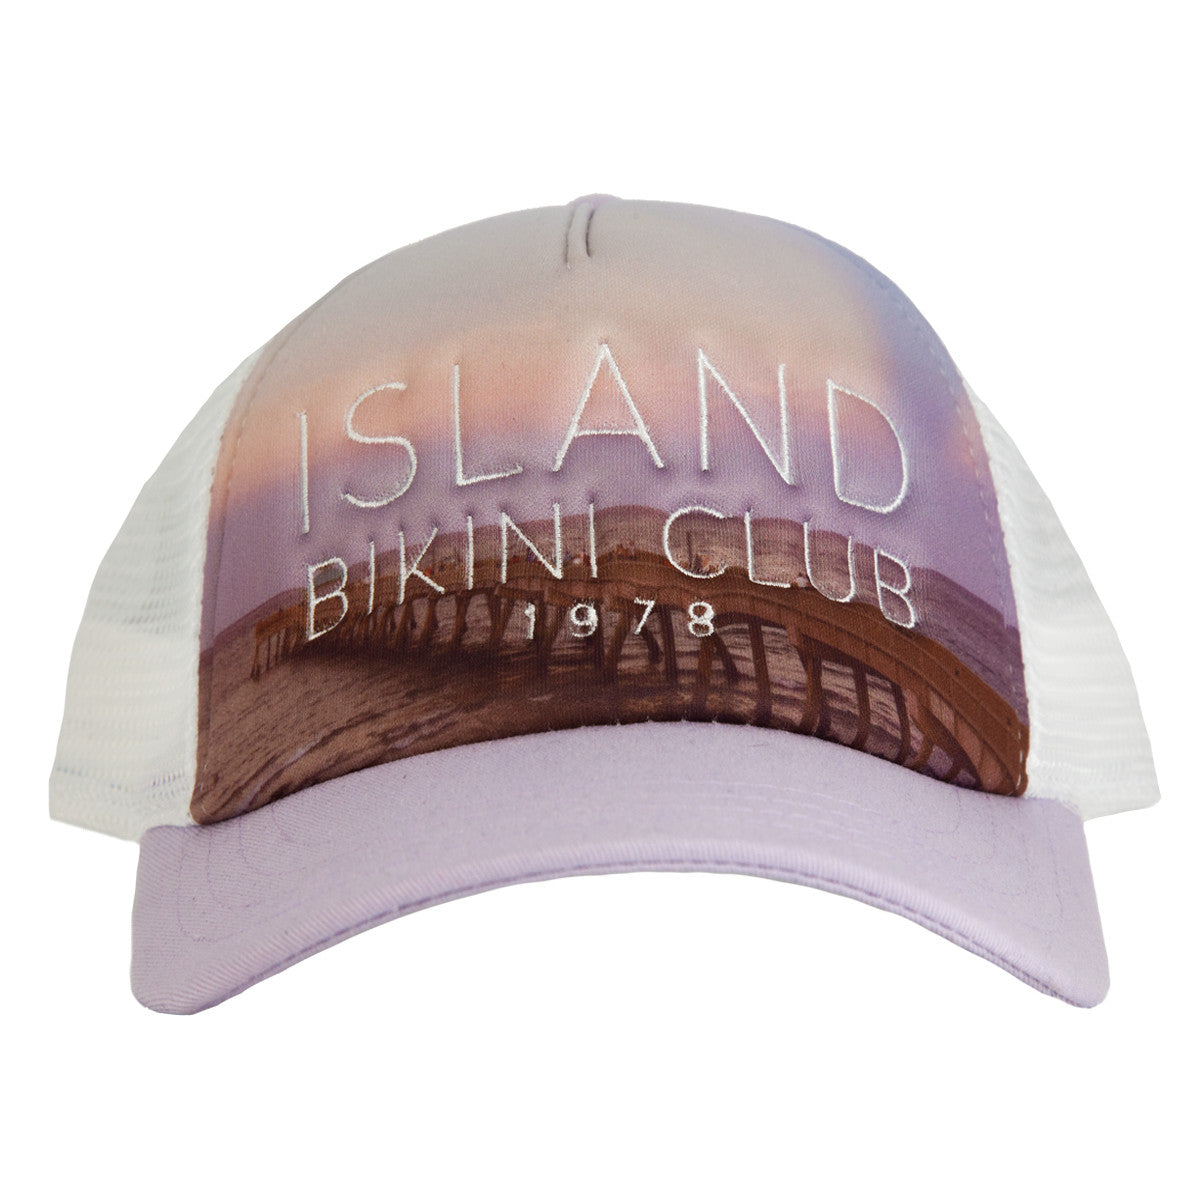 Island Water Sports Bikini Club Trucker Lilac OS